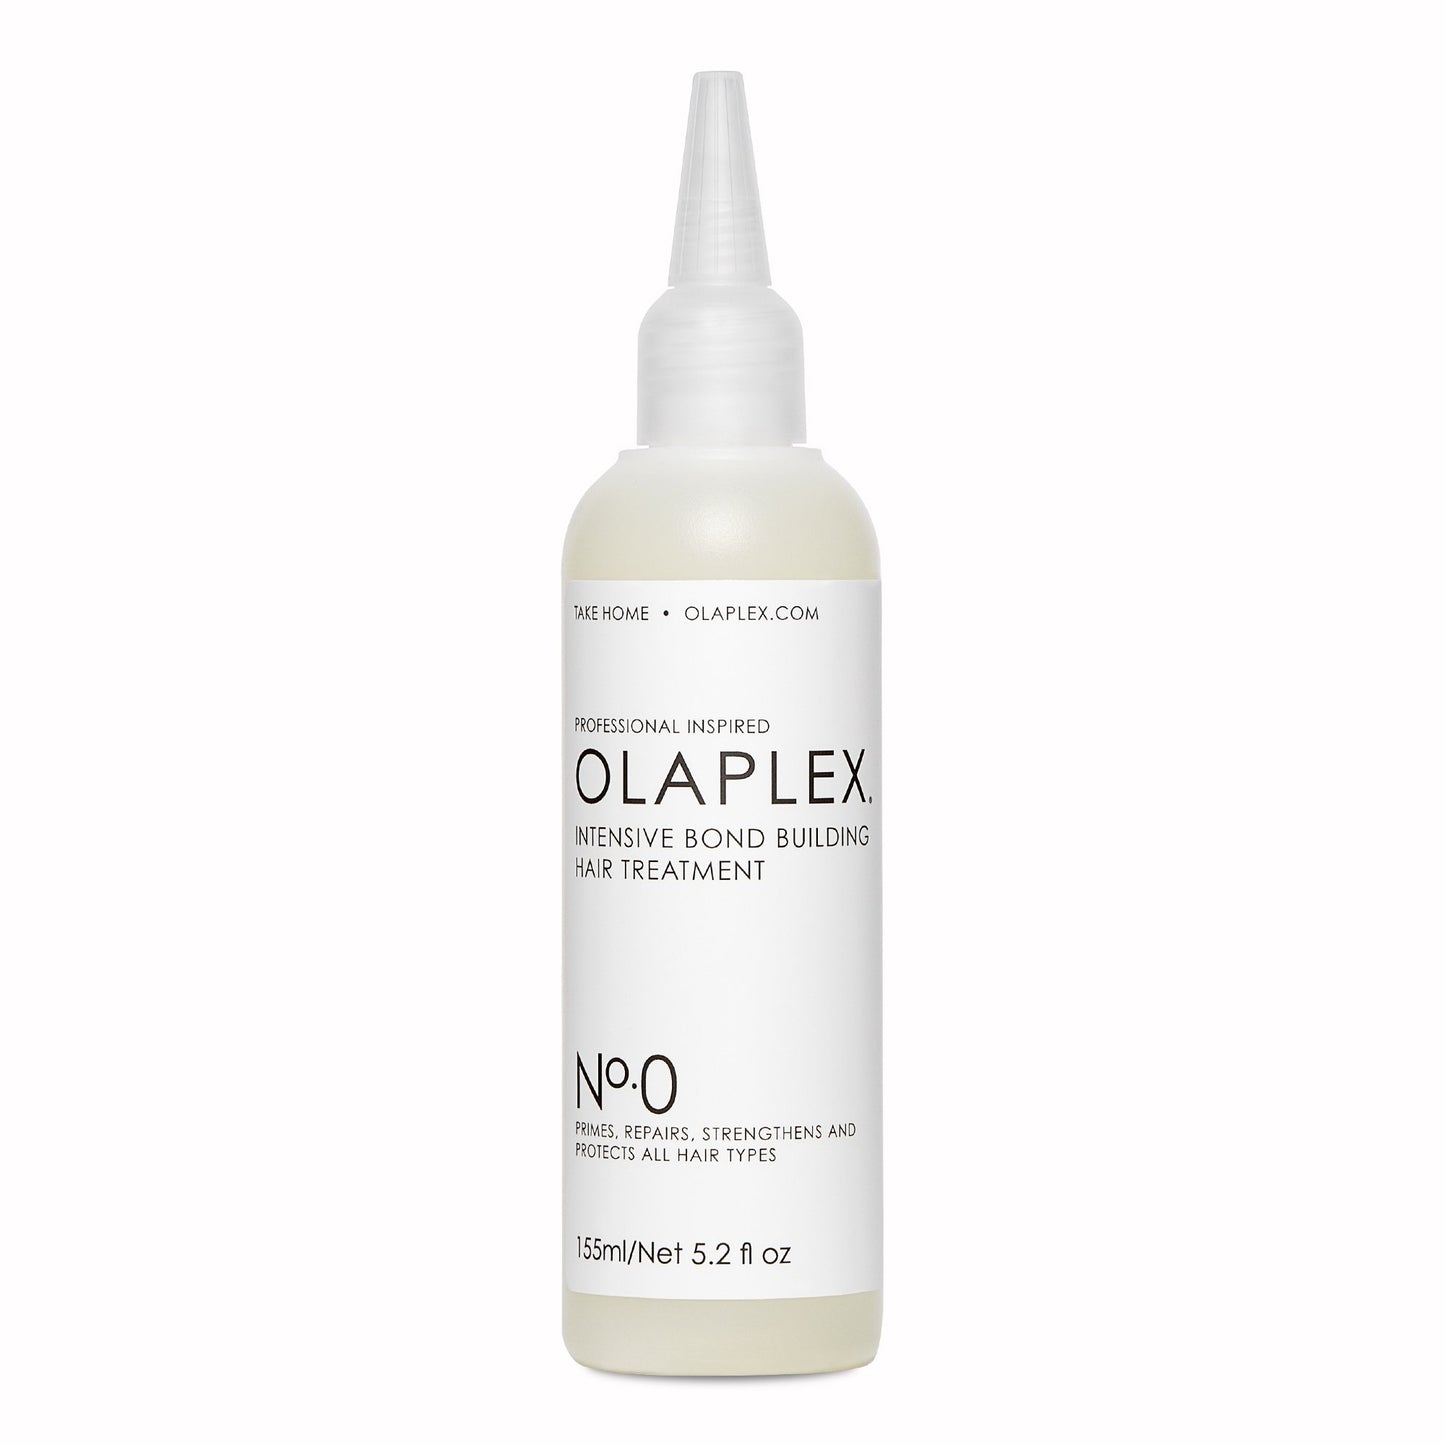 OLAPLEX 0 - INTENSIVE BOND BUILDING HAIR TREATMENT